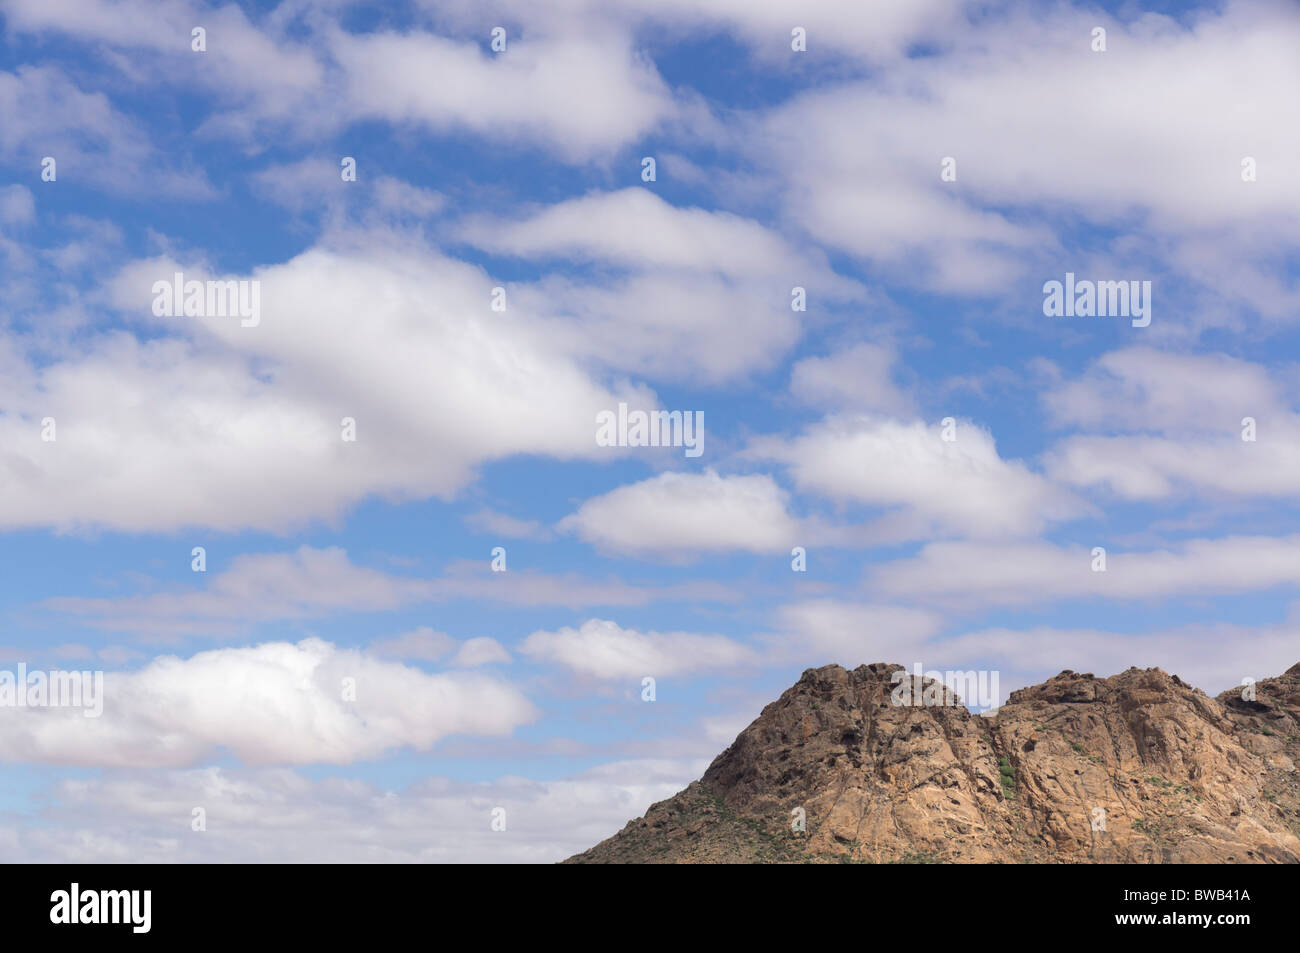 Fuerteventura, Canary Islands - mountain and sky. Stock Photo